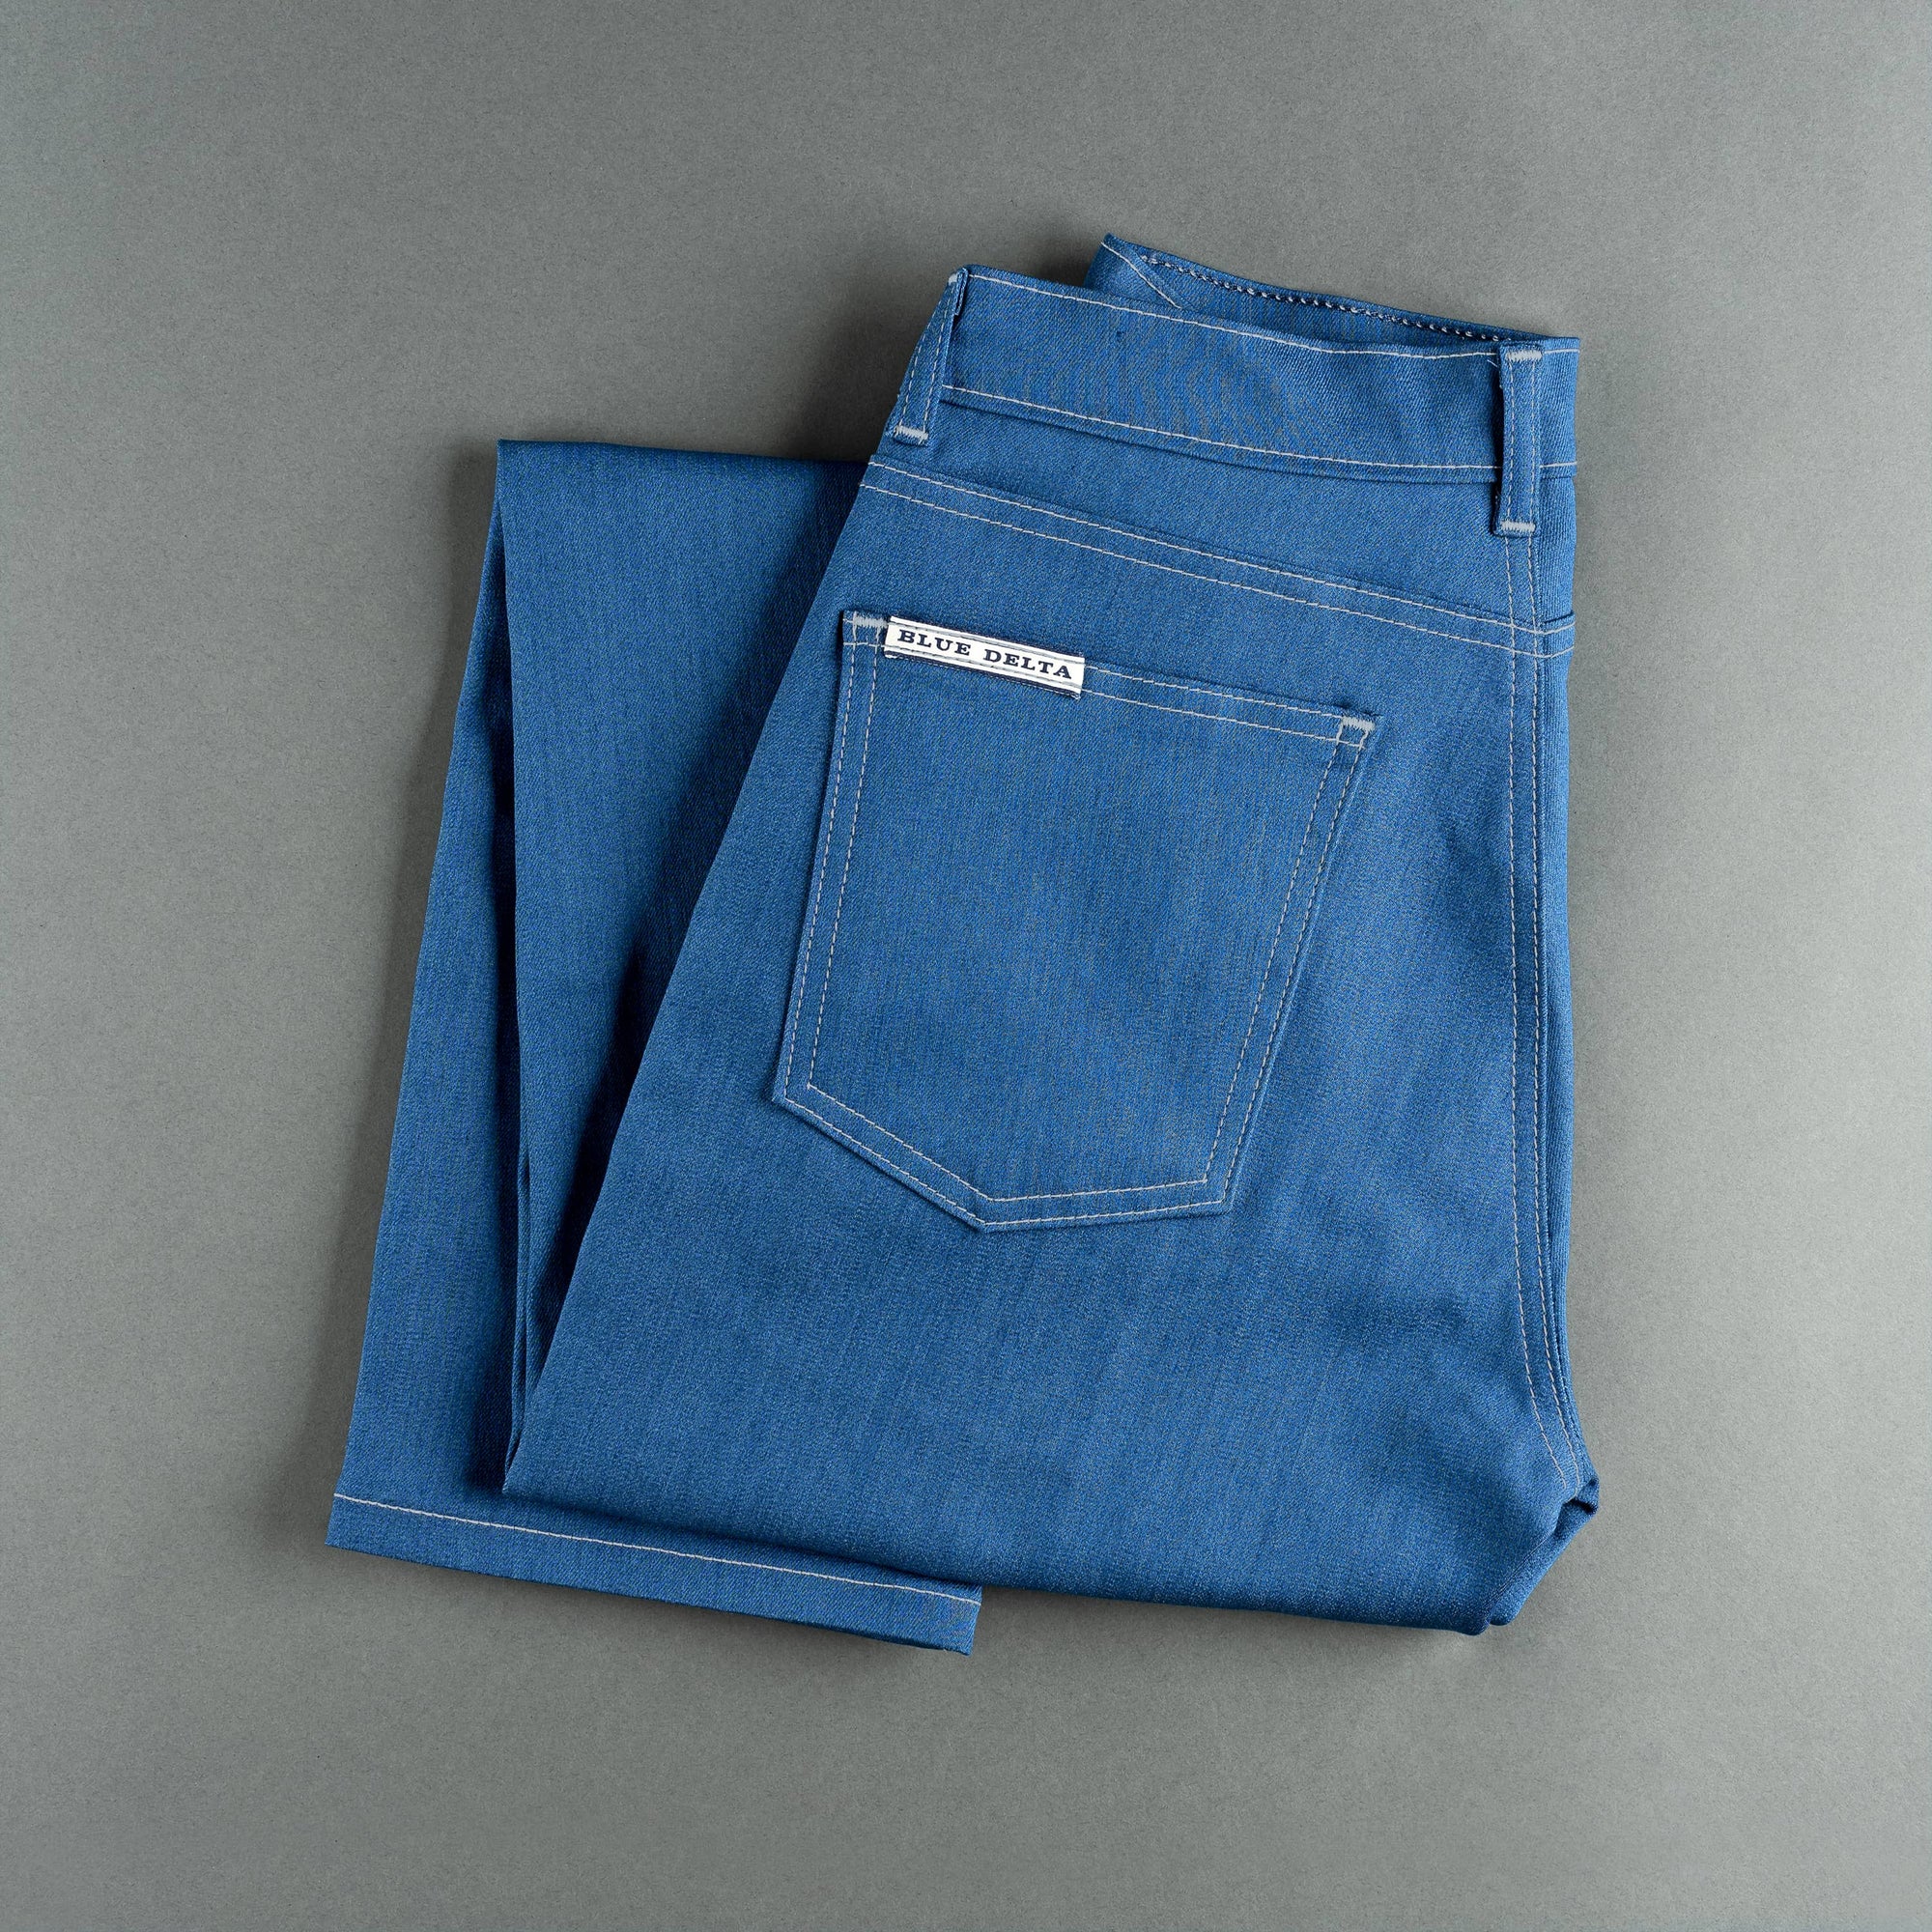 blue denim jeans fabrica